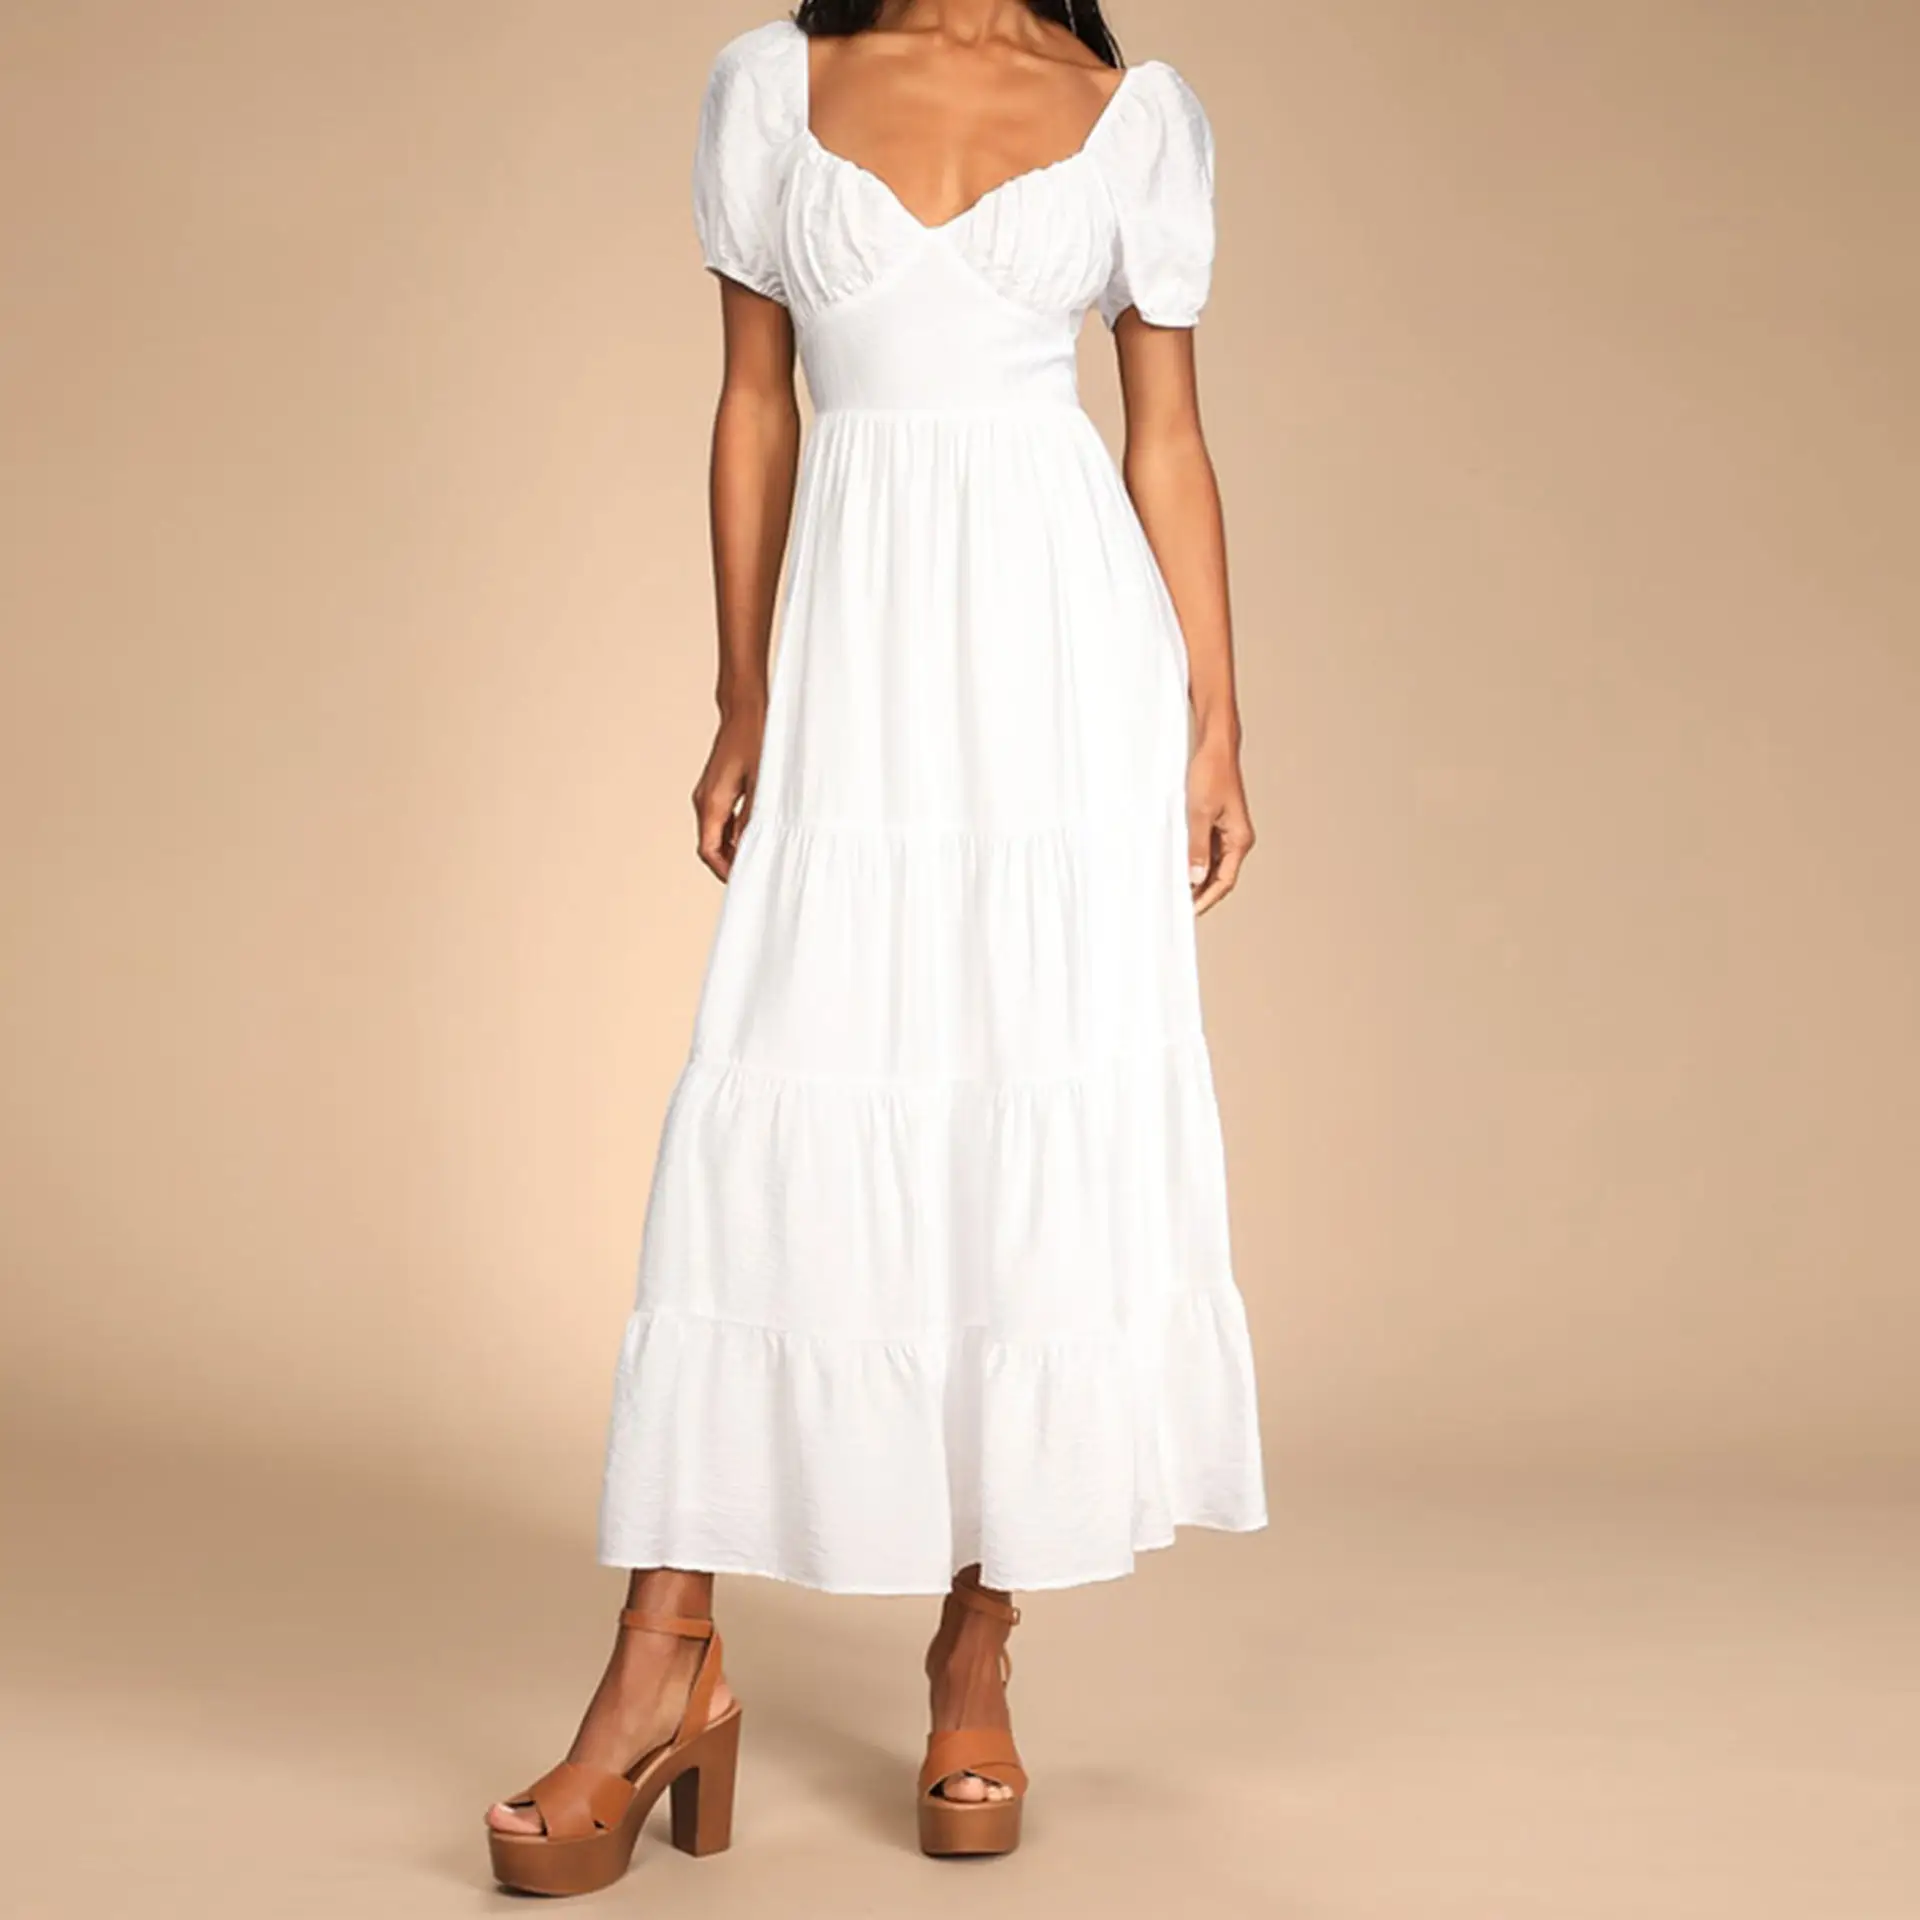 Australia custom ladies white summer puff sleeve corsetto increspato abiti casual donna lady elegant plus size maxi dress in lino